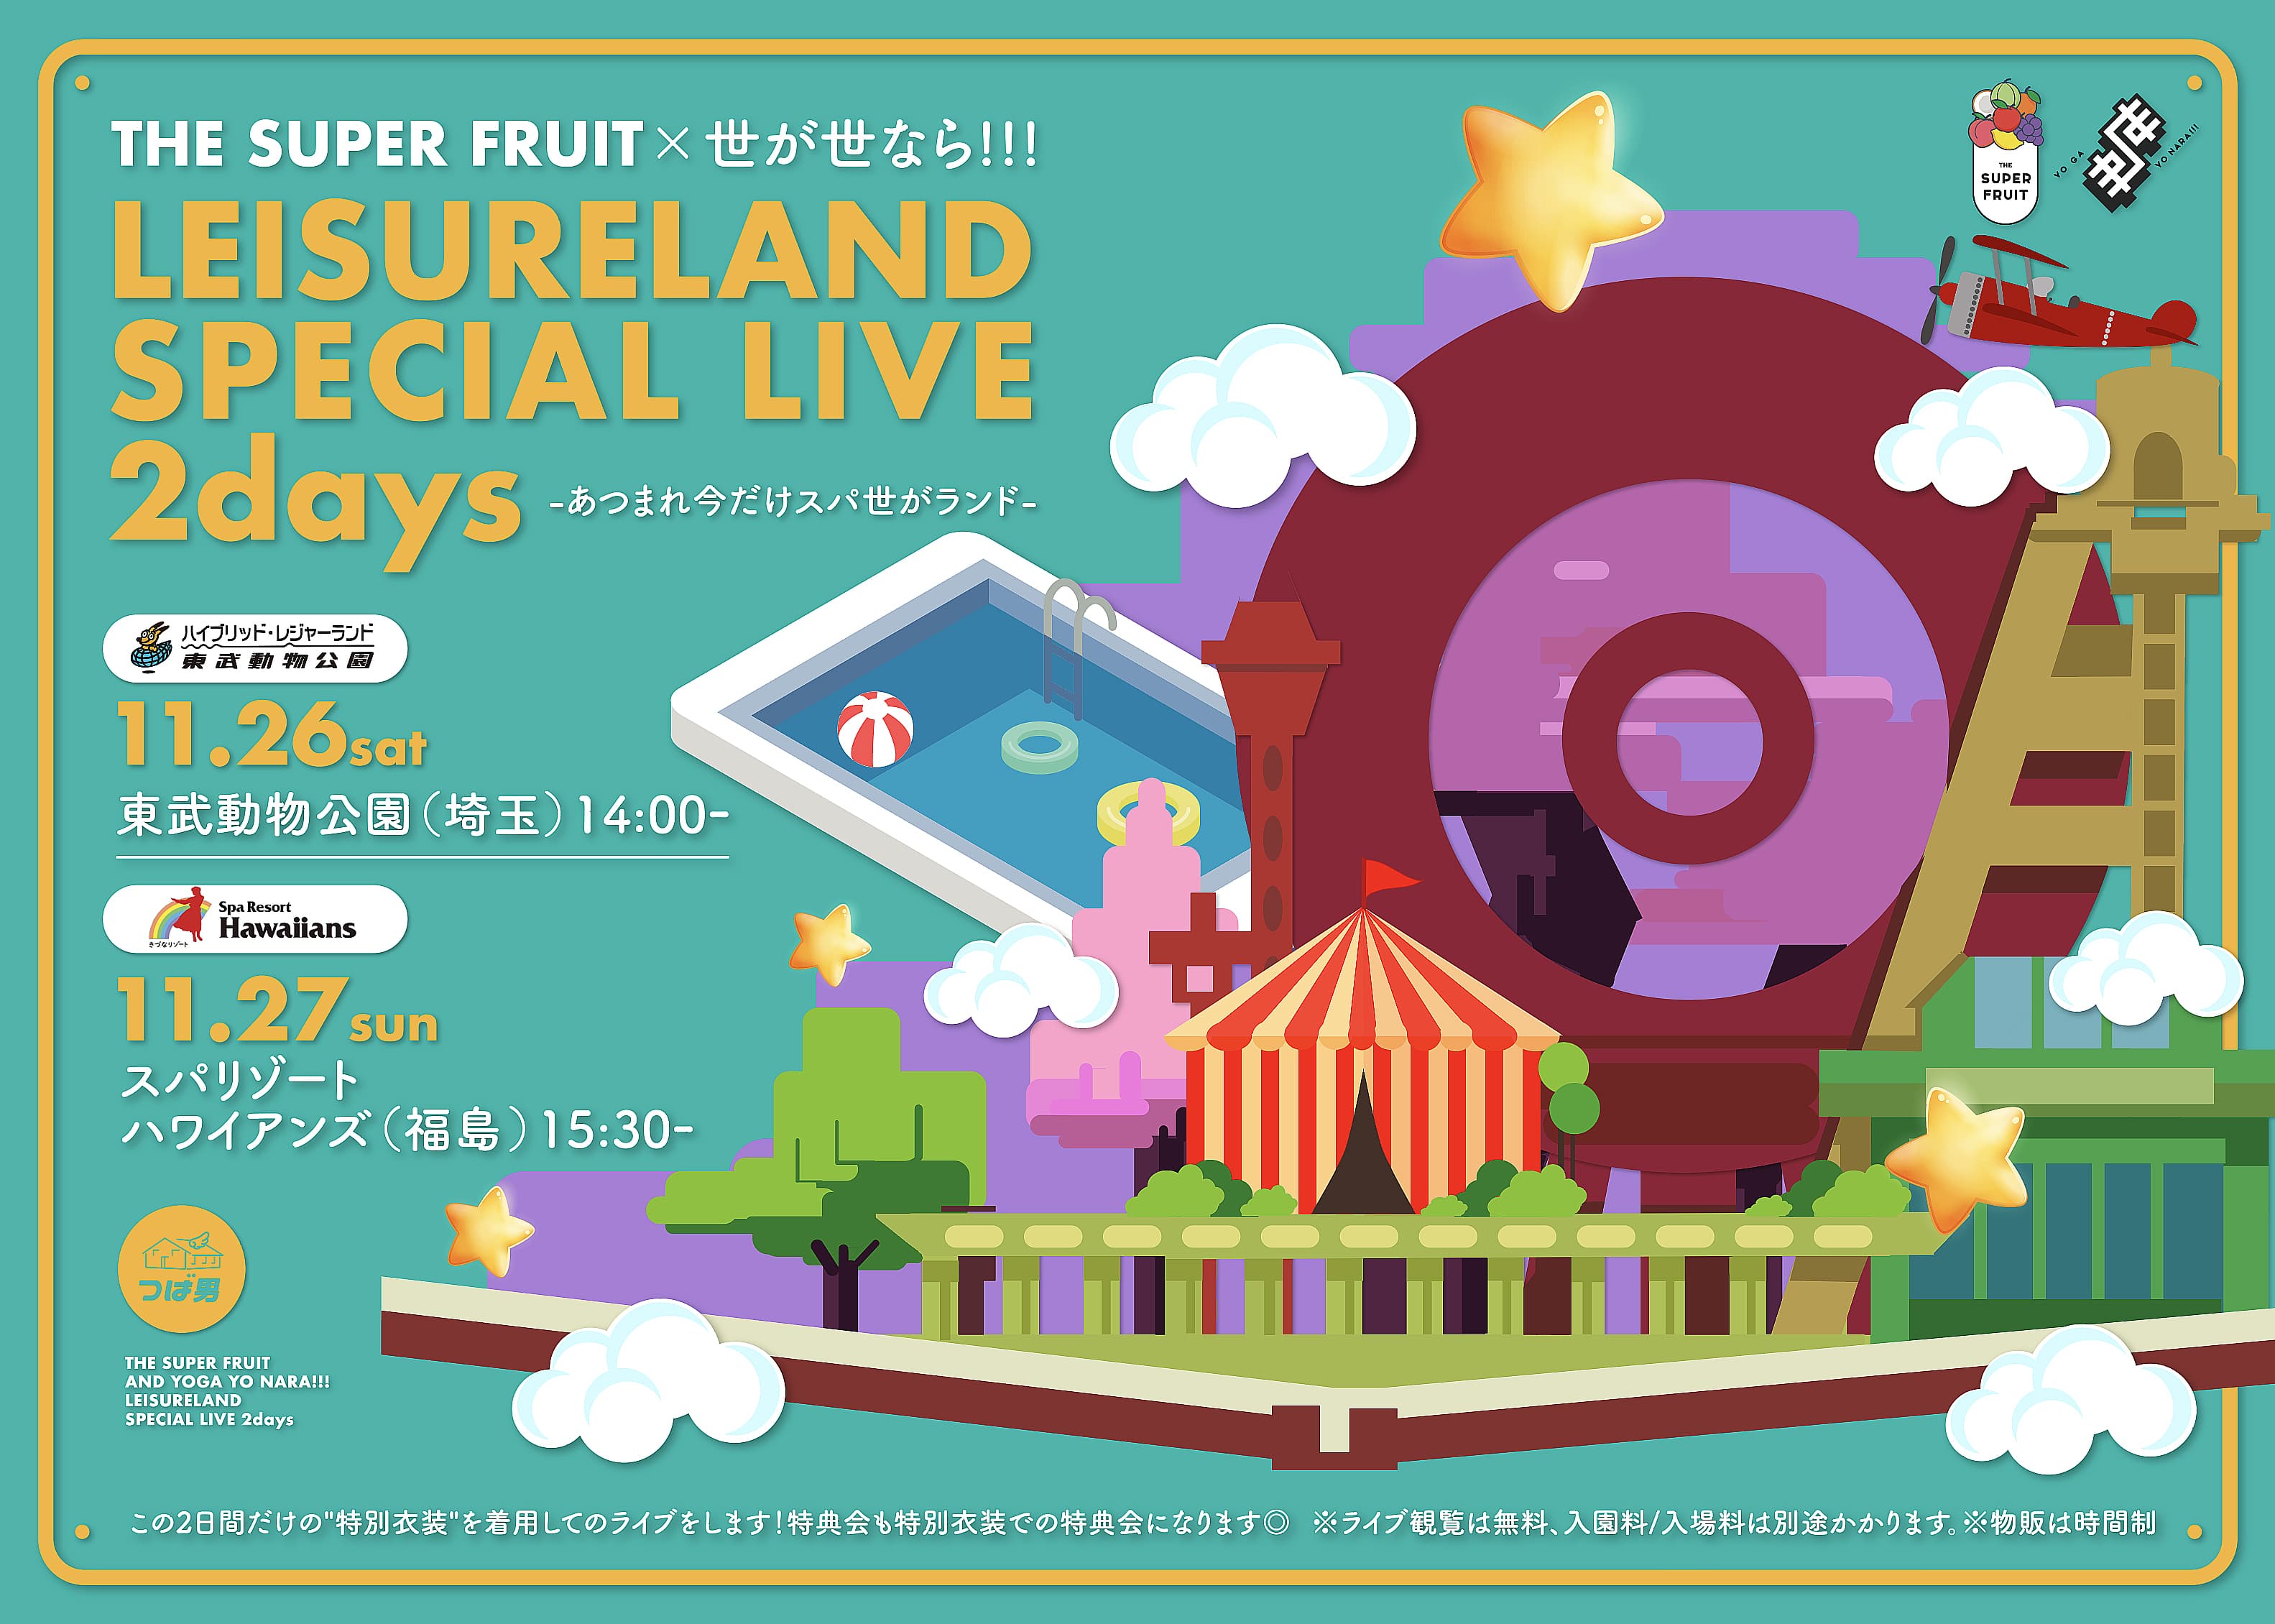 THE SUPER FRUIT × 世が世なら!!! レジャーランドSPECIAL LIVE 2days -あつまれ今だけスパ世がランド- @スパリゾートハワイアンズ